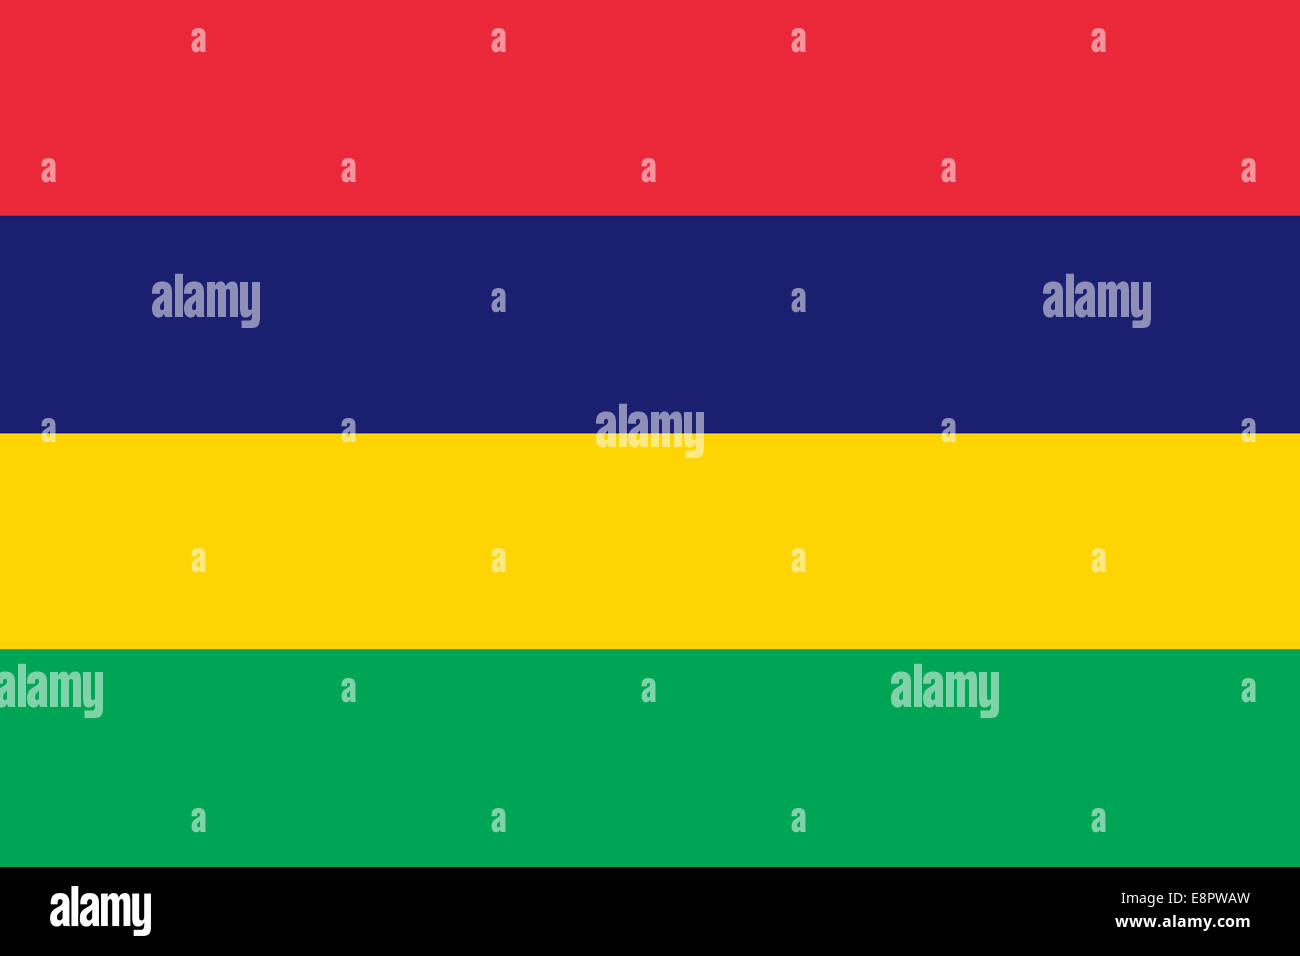 Flag of Mauritius - Mauritius flag standard ratio - true RGB color mode Stock Photo